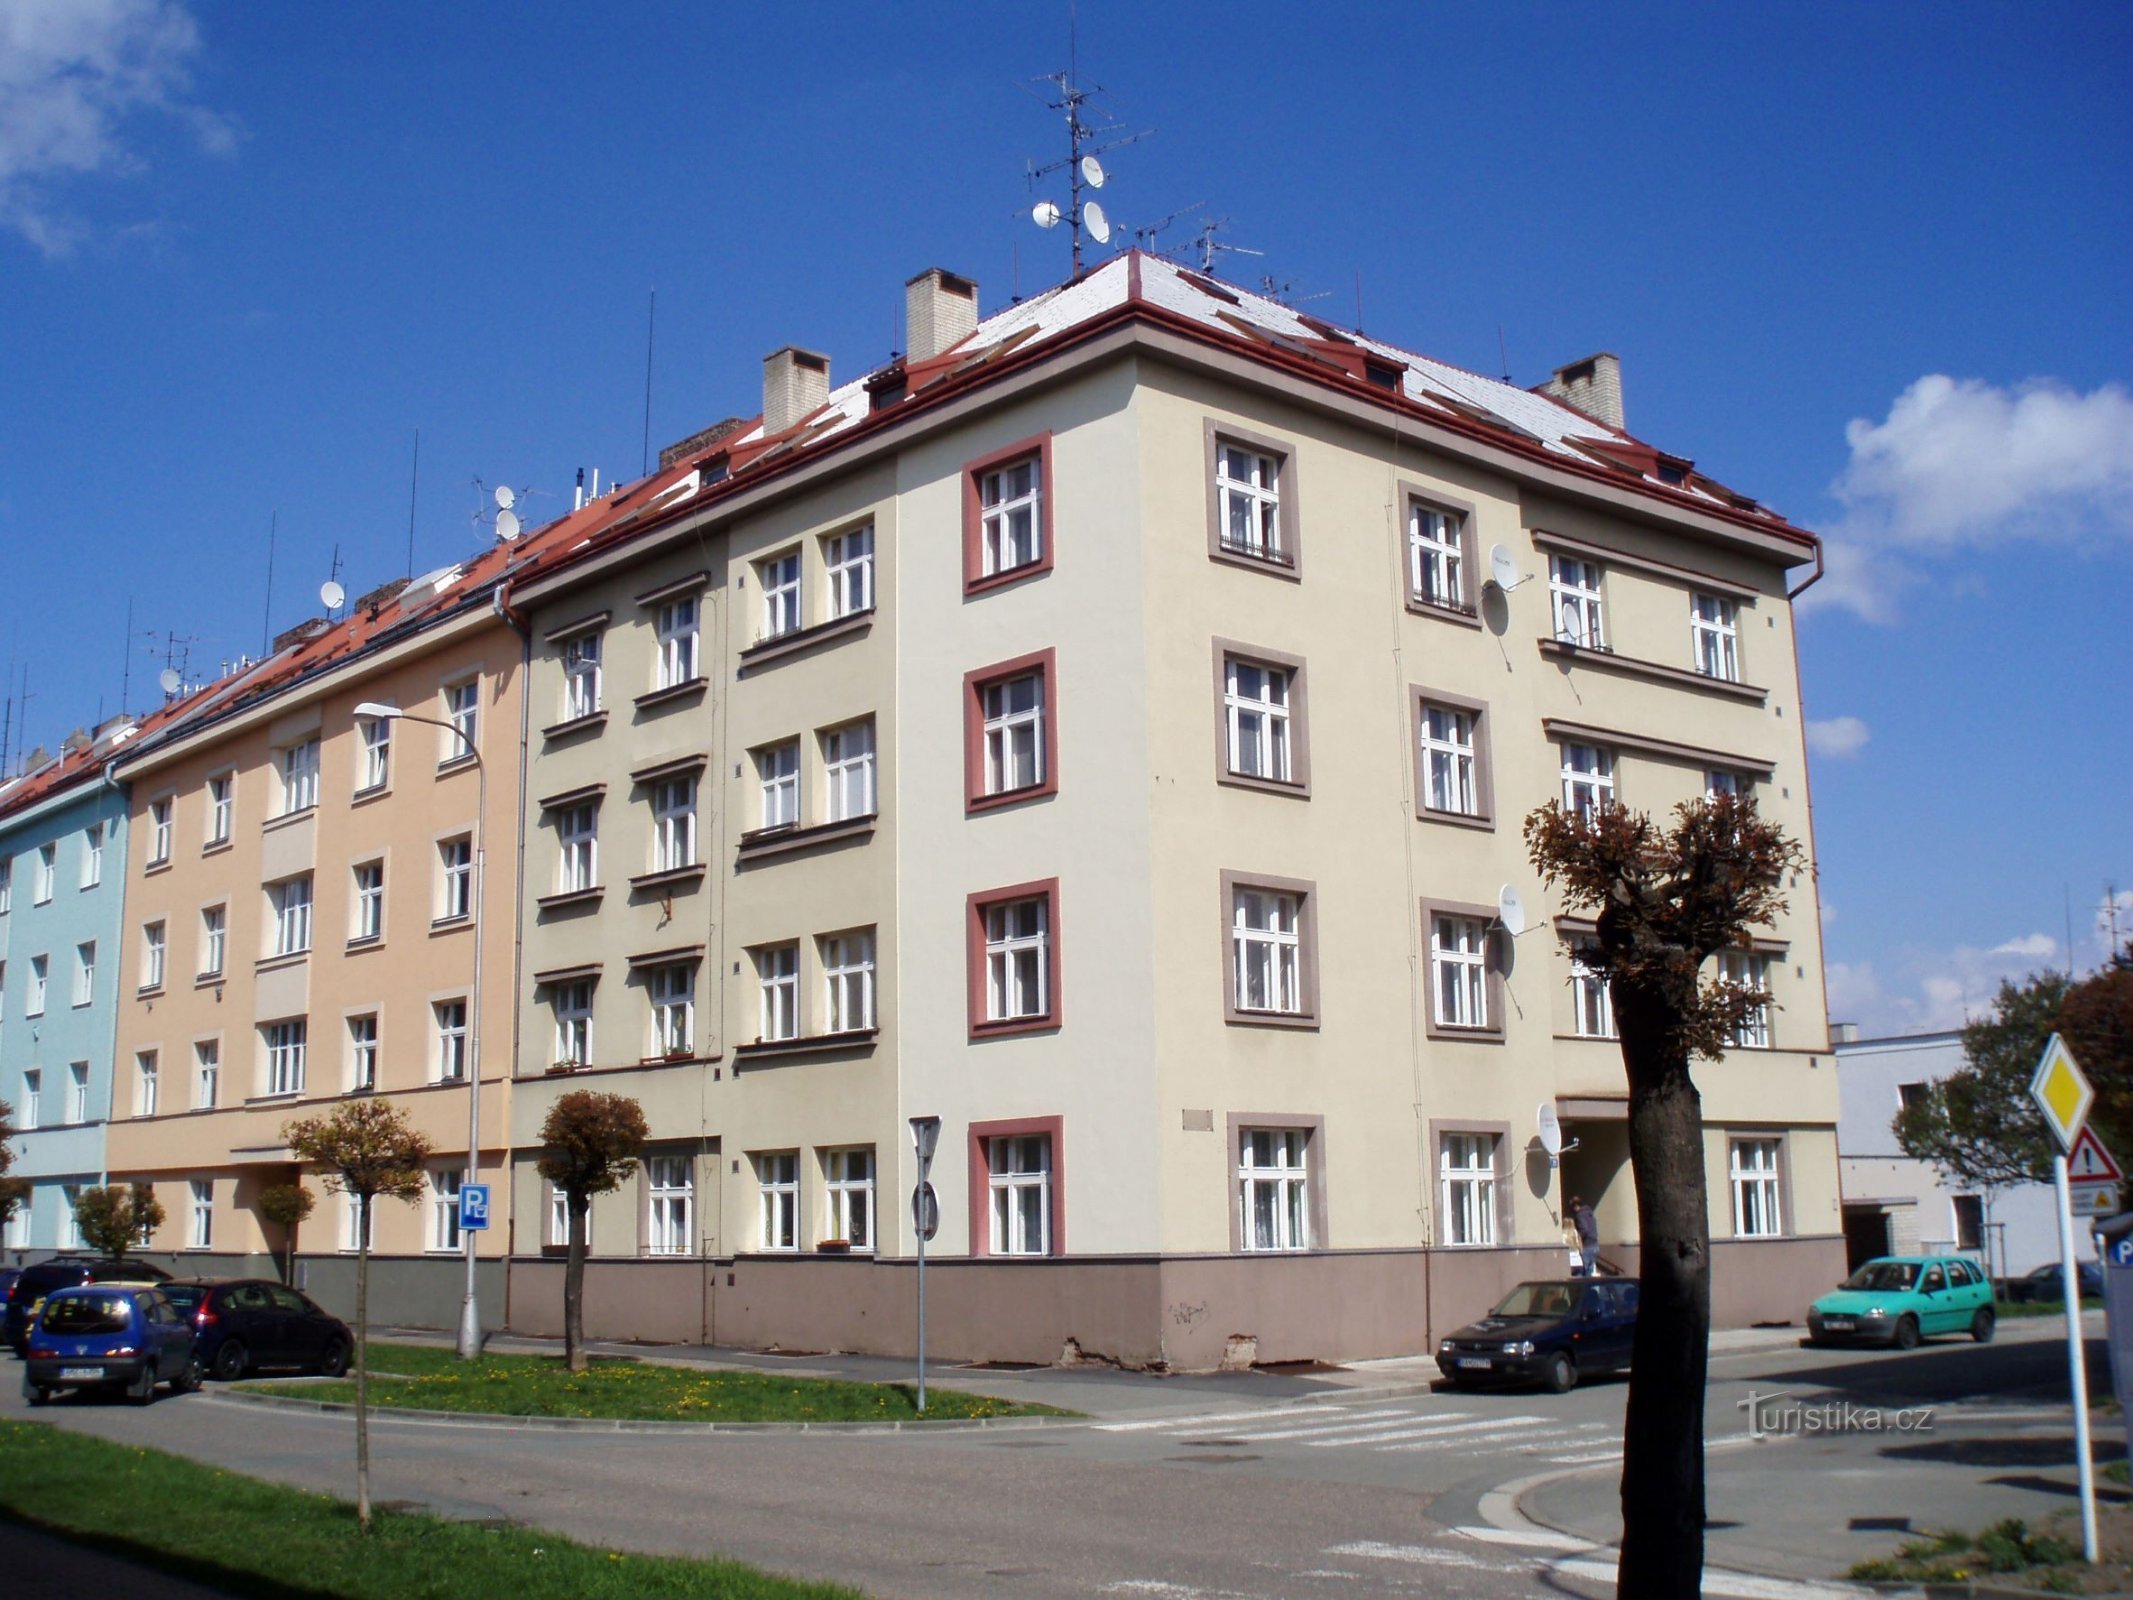 Albertova nr. 826 (Hradec Králové, 21.4.2012. april XNUMX)